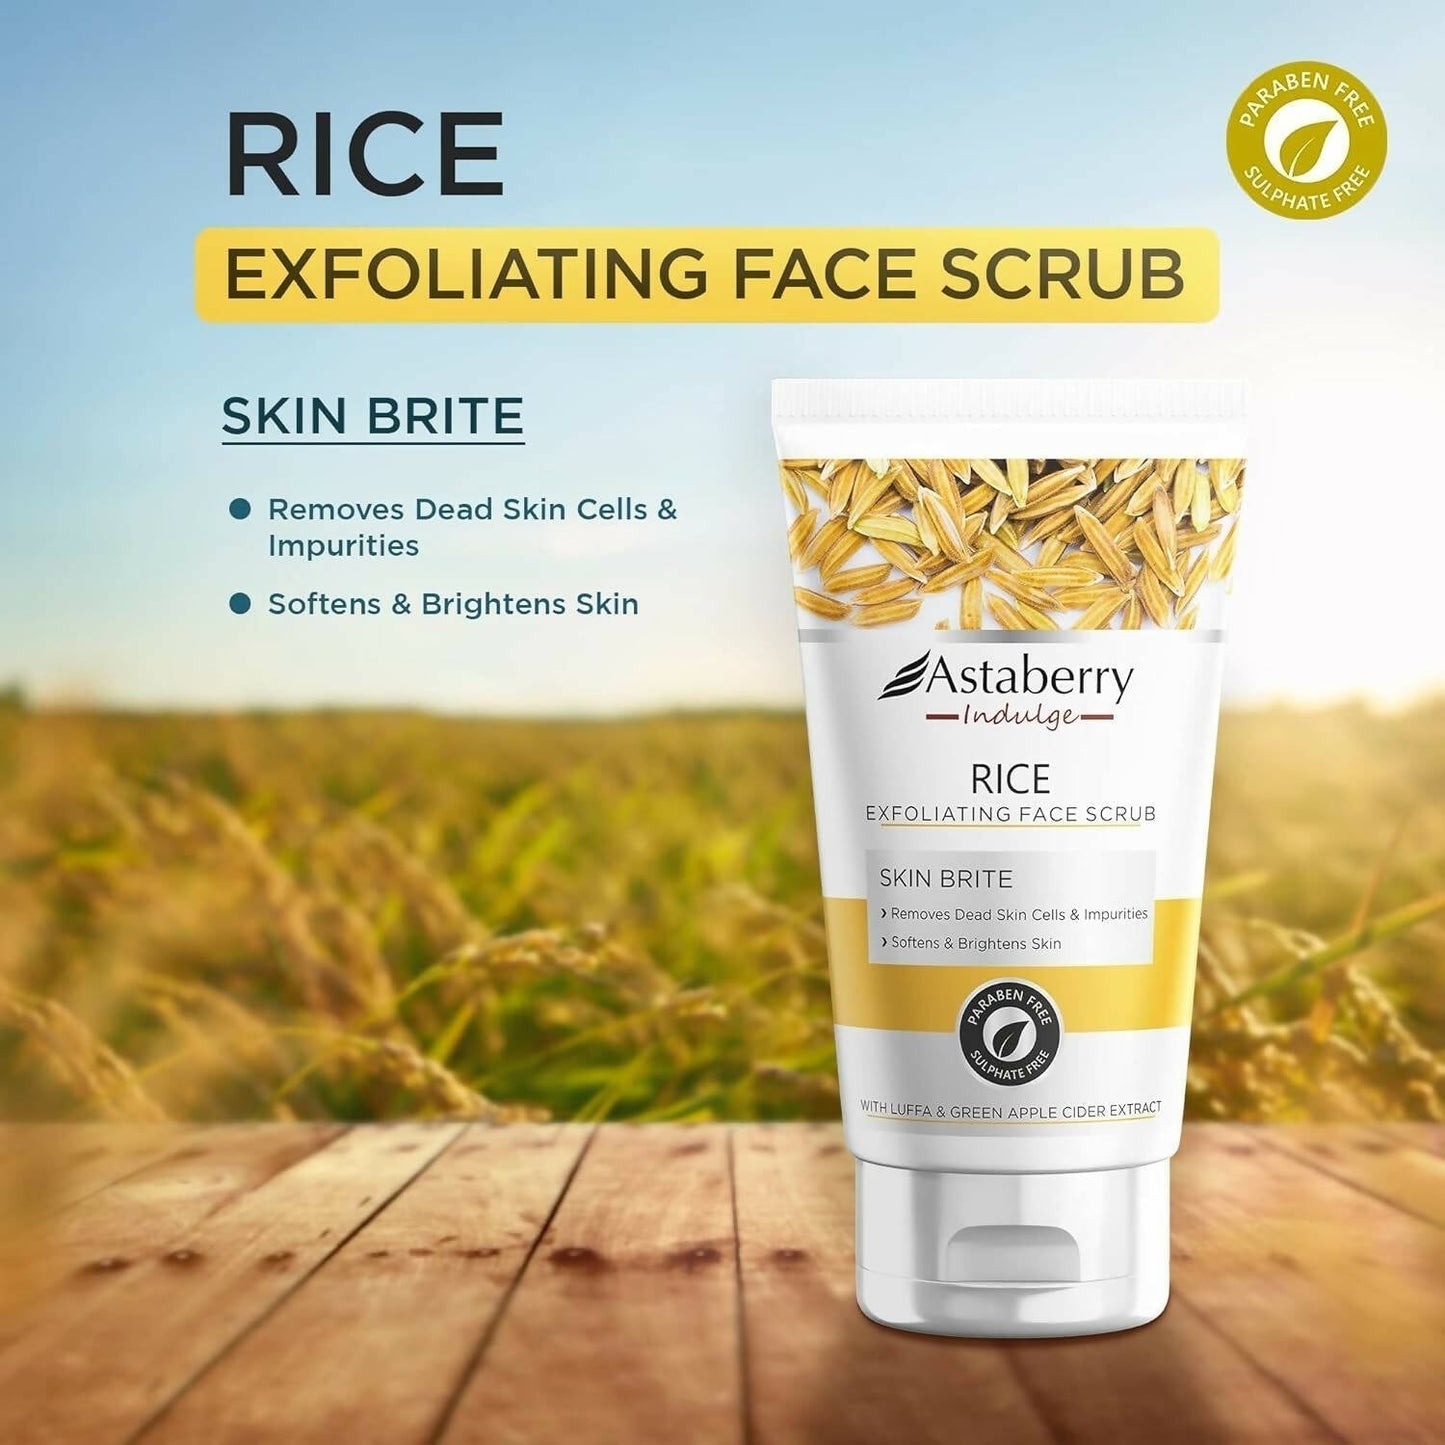 Astaberry Indulge Rice Exfoliating Face Scrub